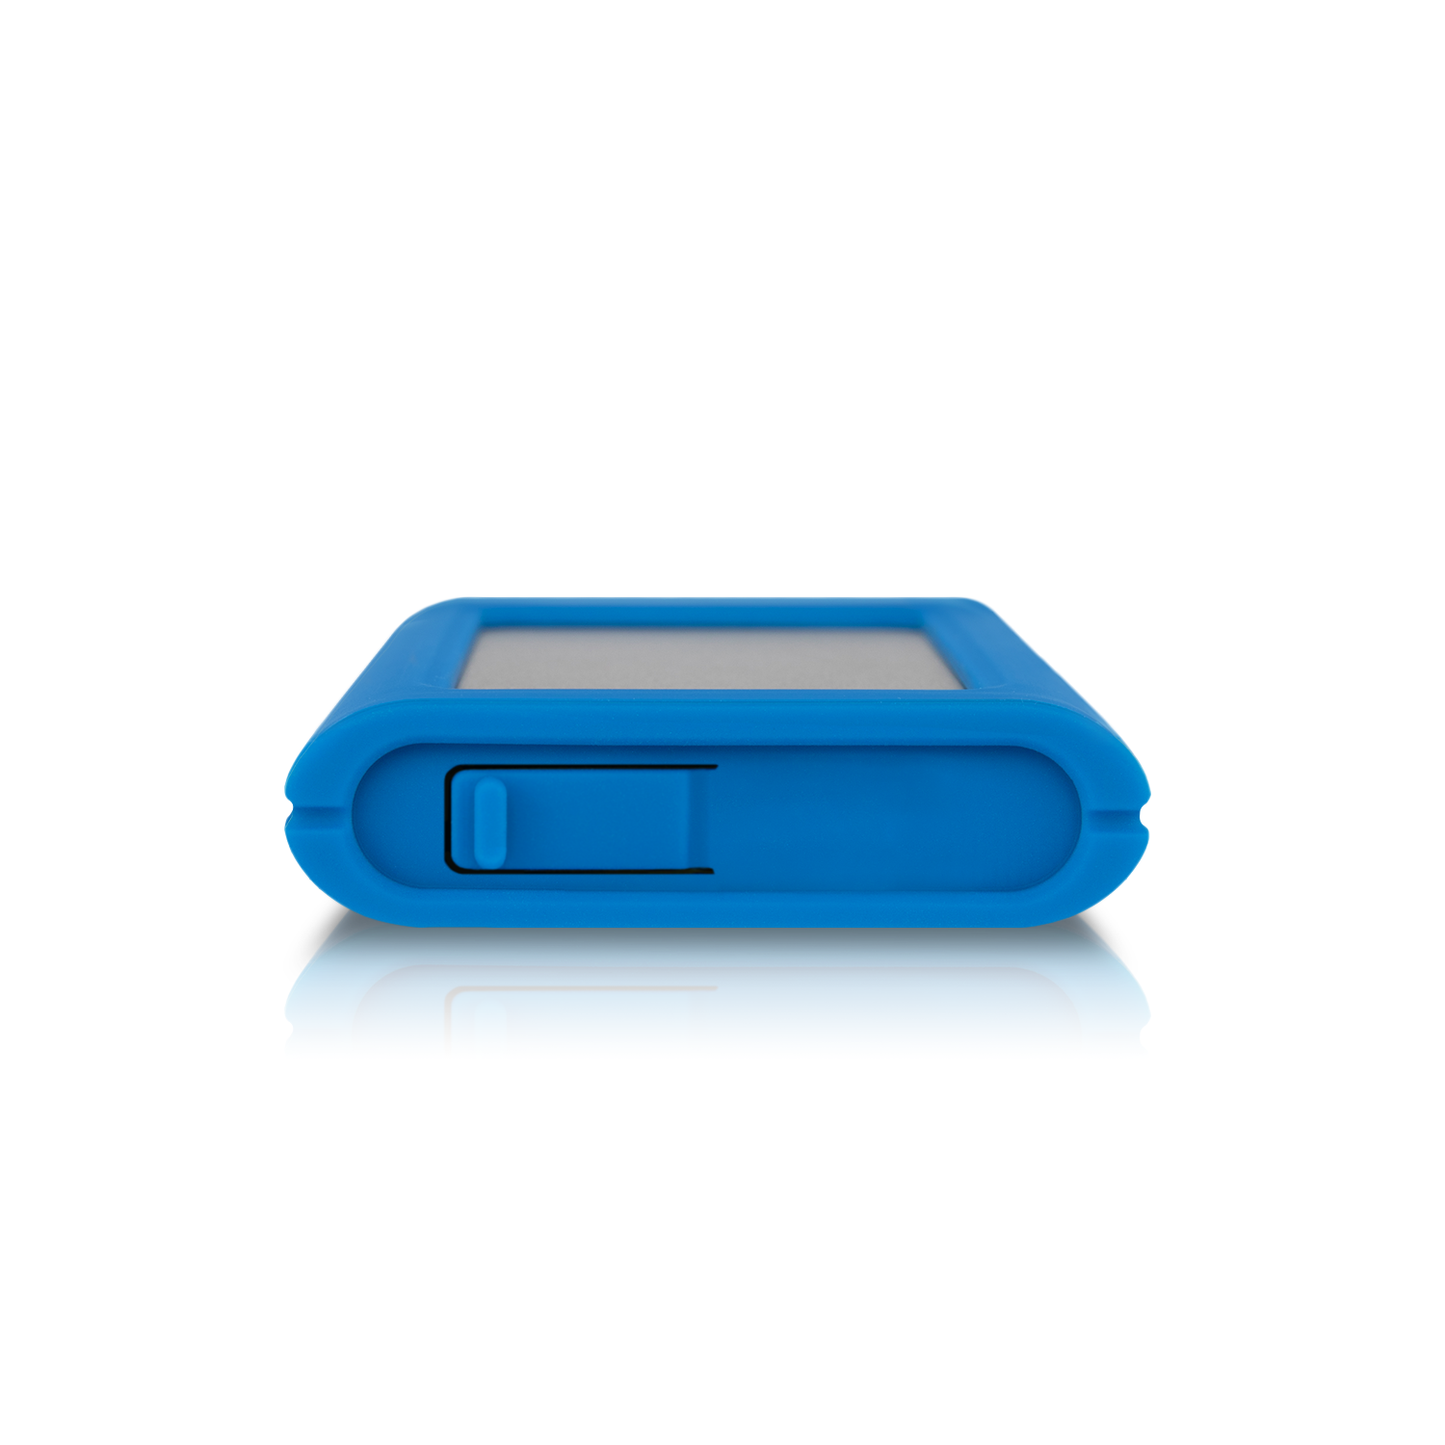 Tuff nano Plus USB-C Portable External SSD - 2TB